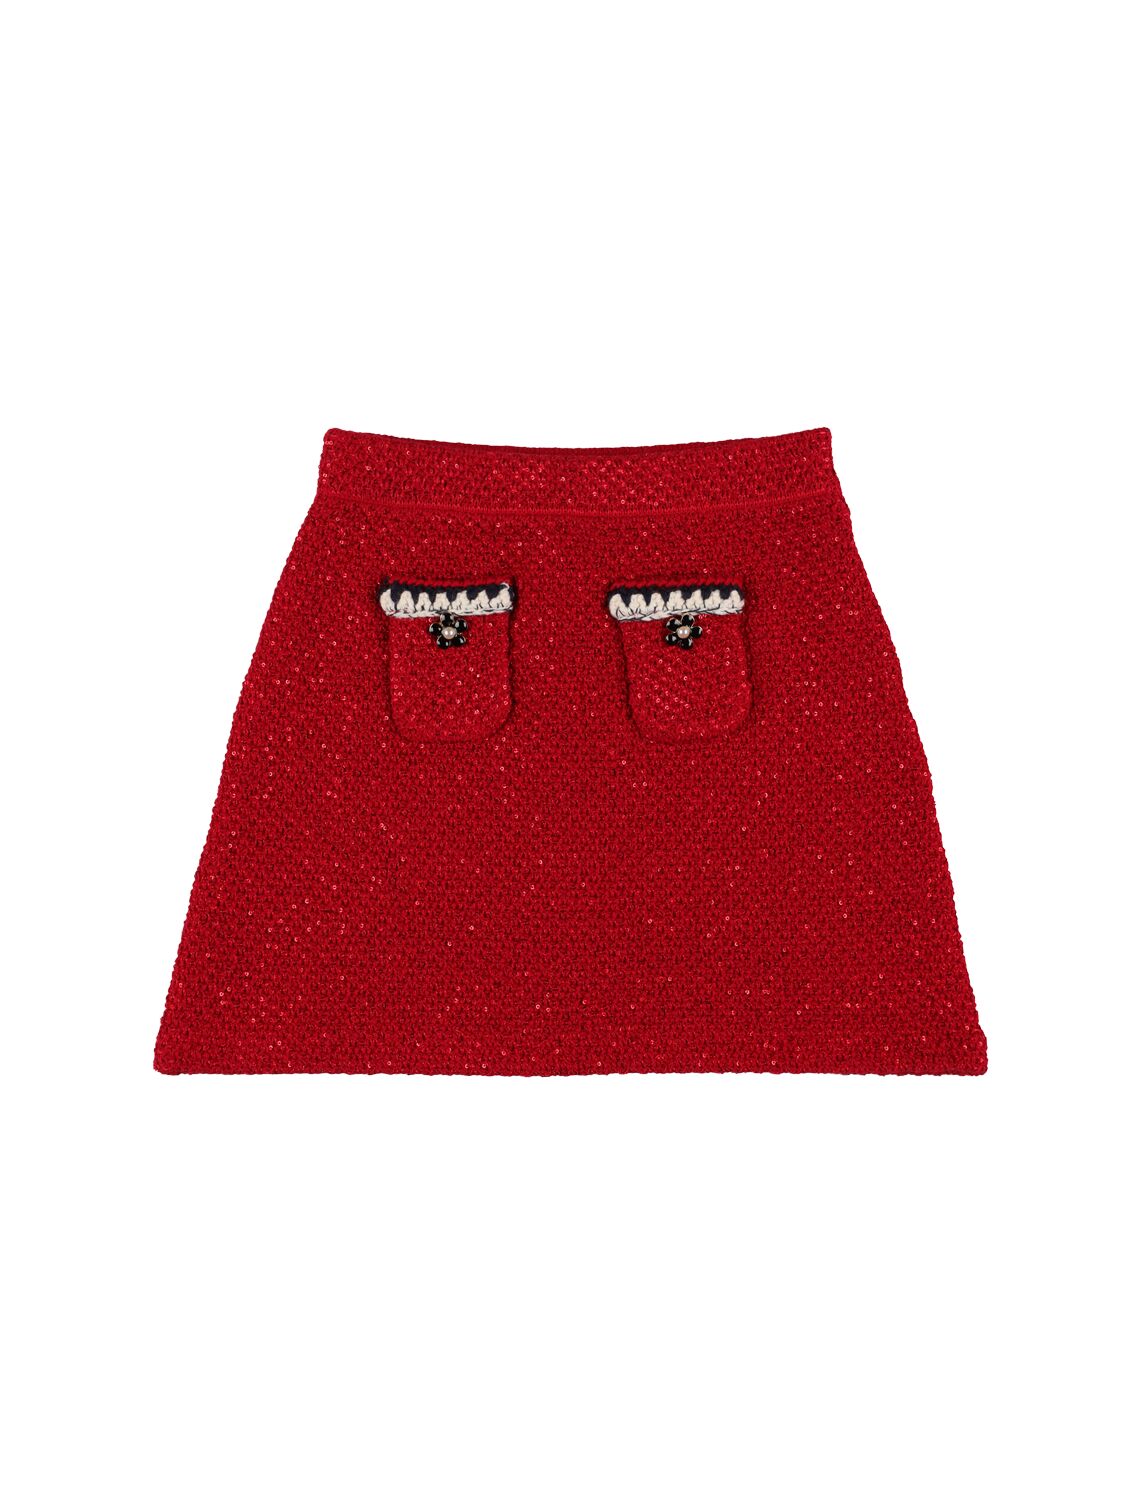 Image of Glittered Cotton Knit Skirt